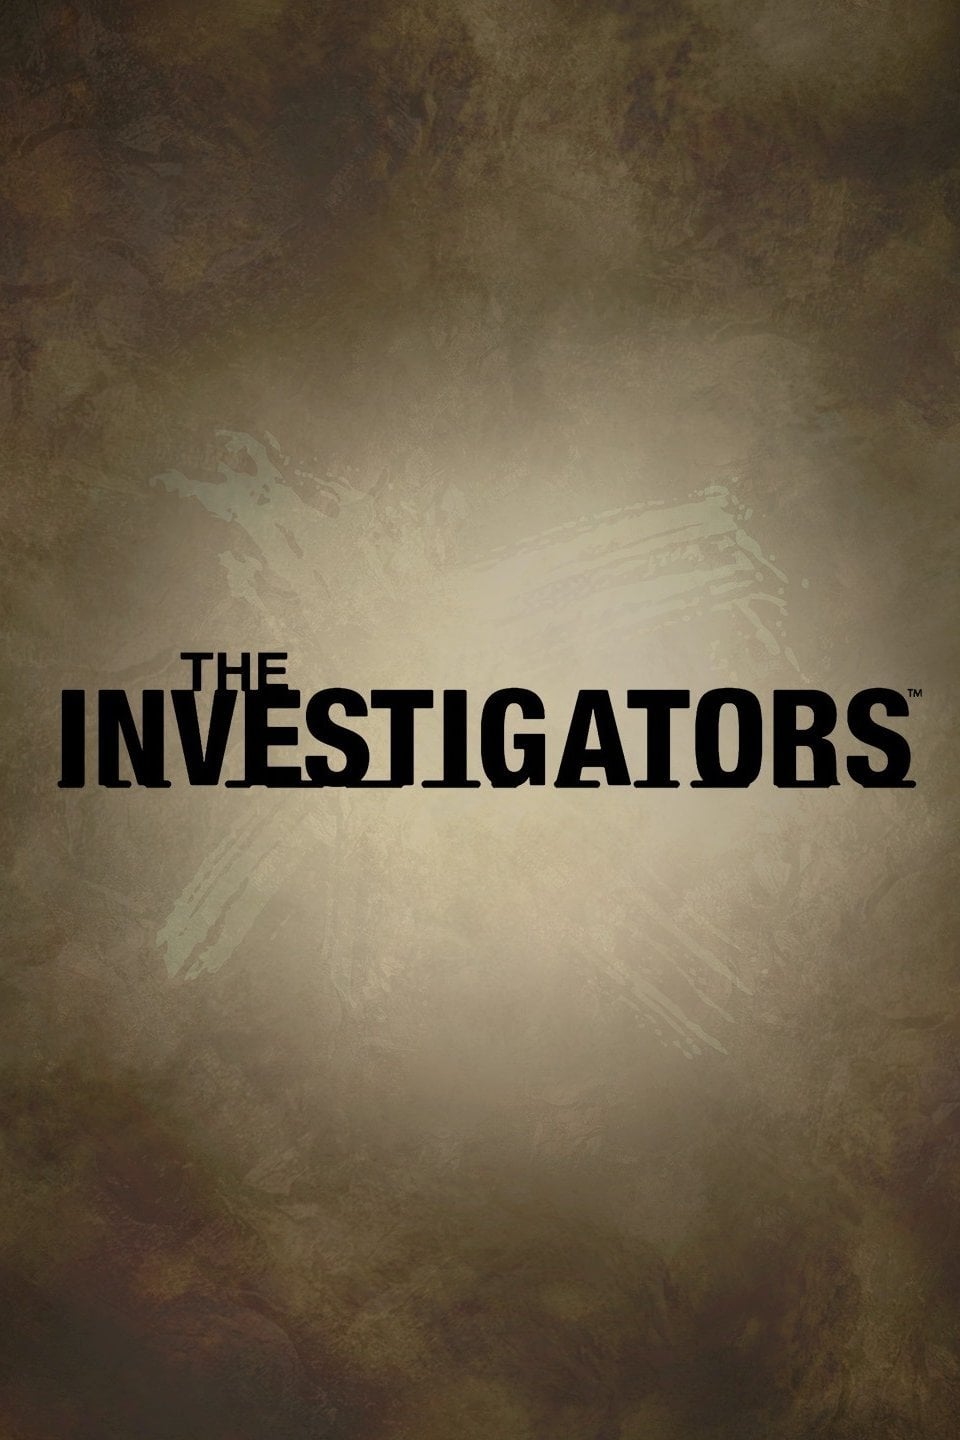 The Investigators (US)